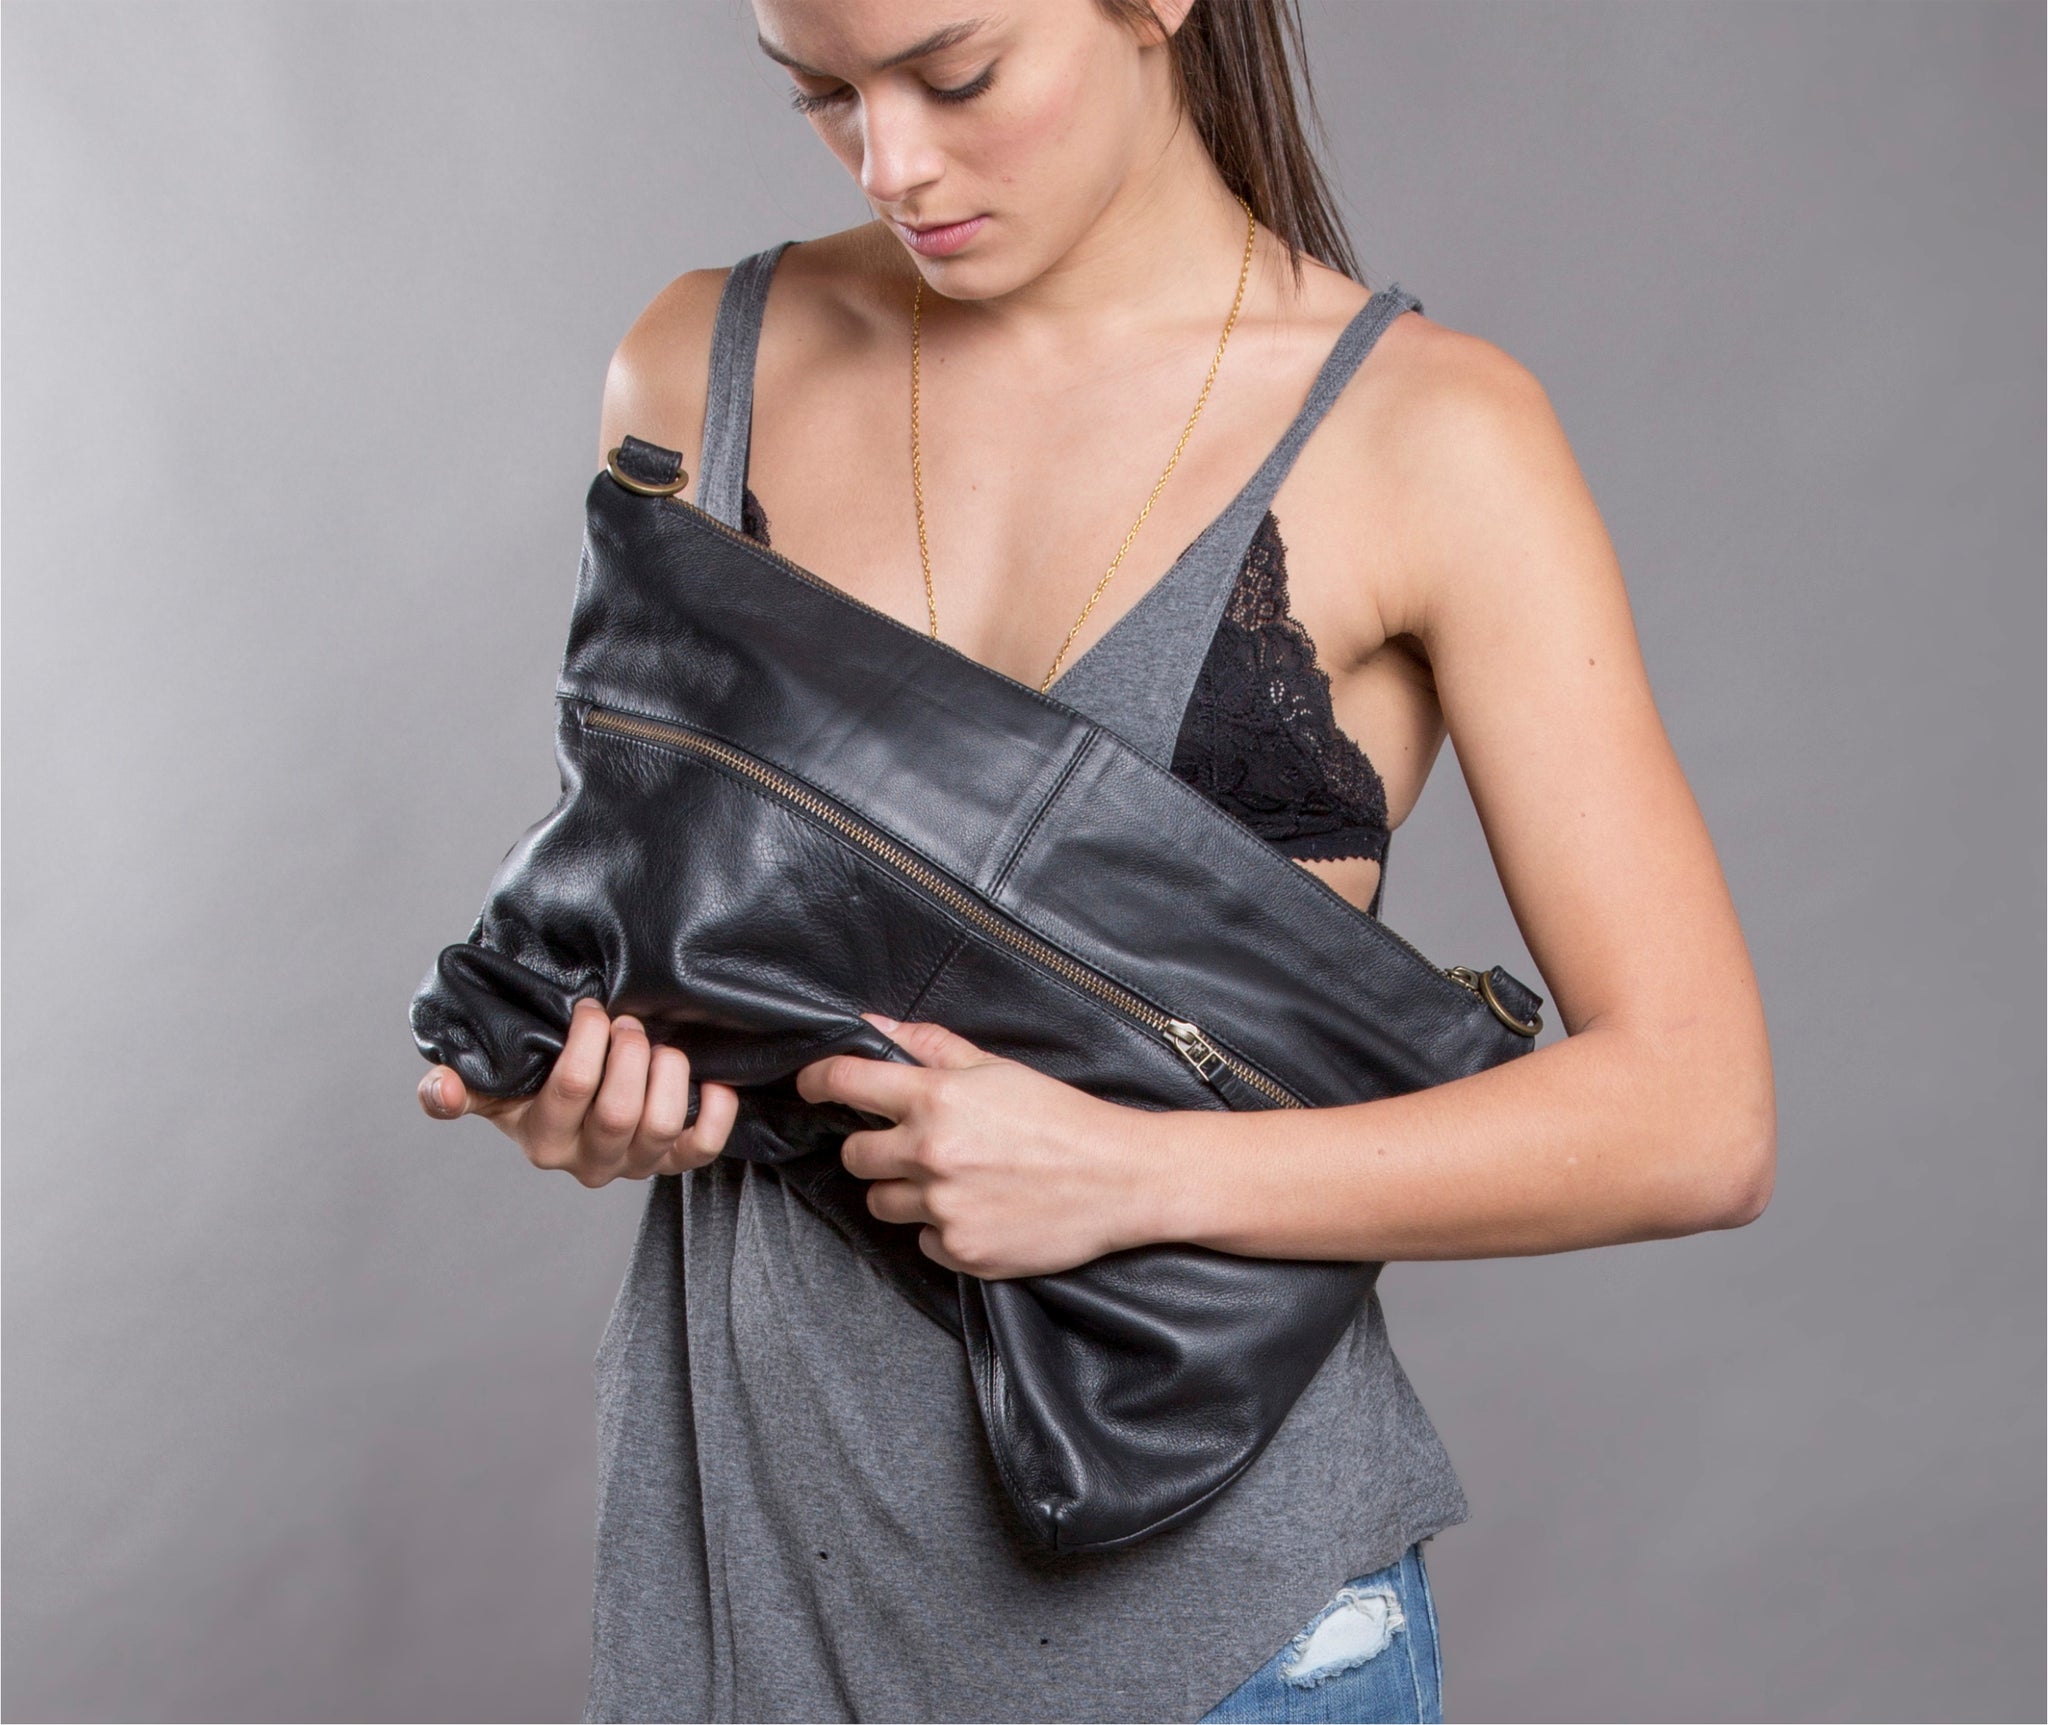 Buy Italian Leather Bag Leather Crossbody Bag Soft Leather Bag